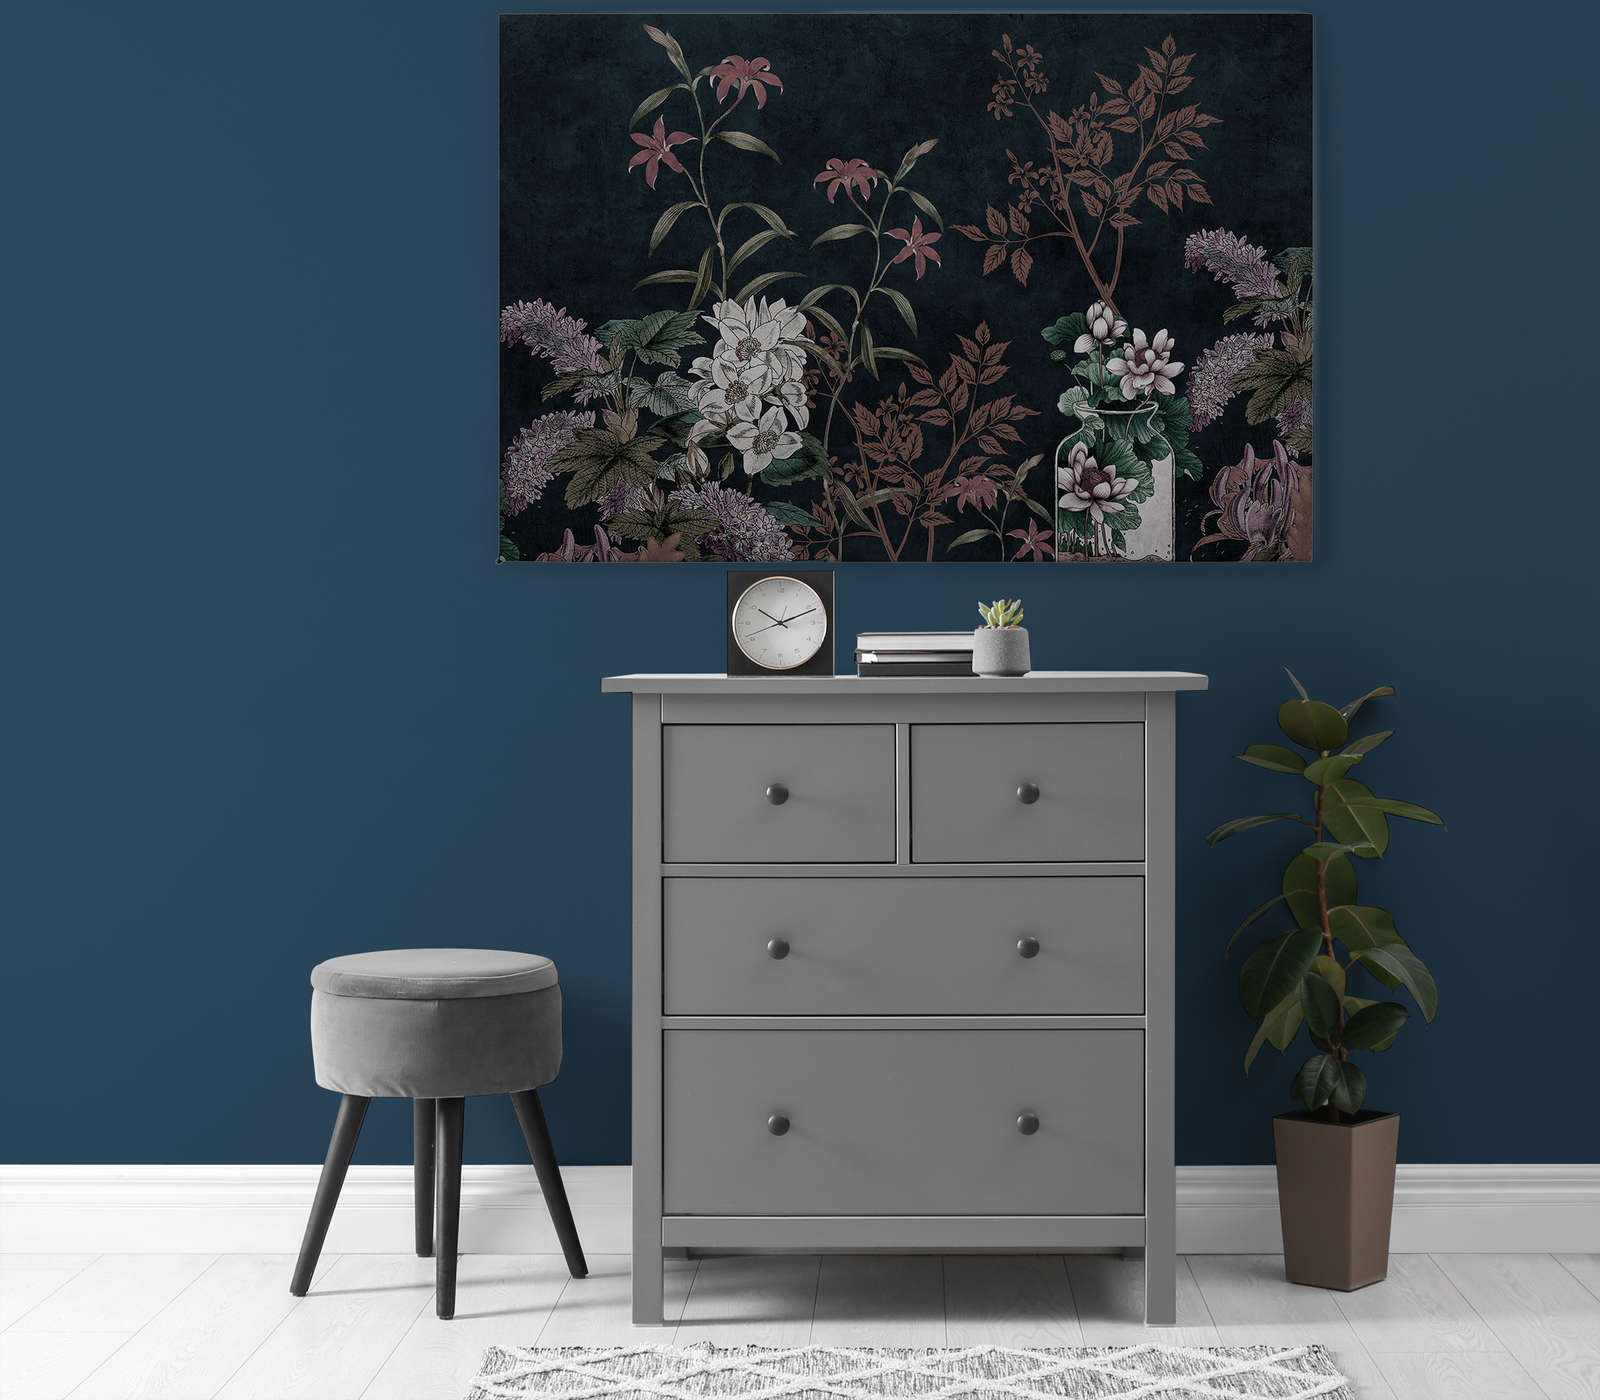             Dark Room 2 - Schwarzes Leinwandbild Botanical Muster Rosa – 1,20 m x 0,80 m
        